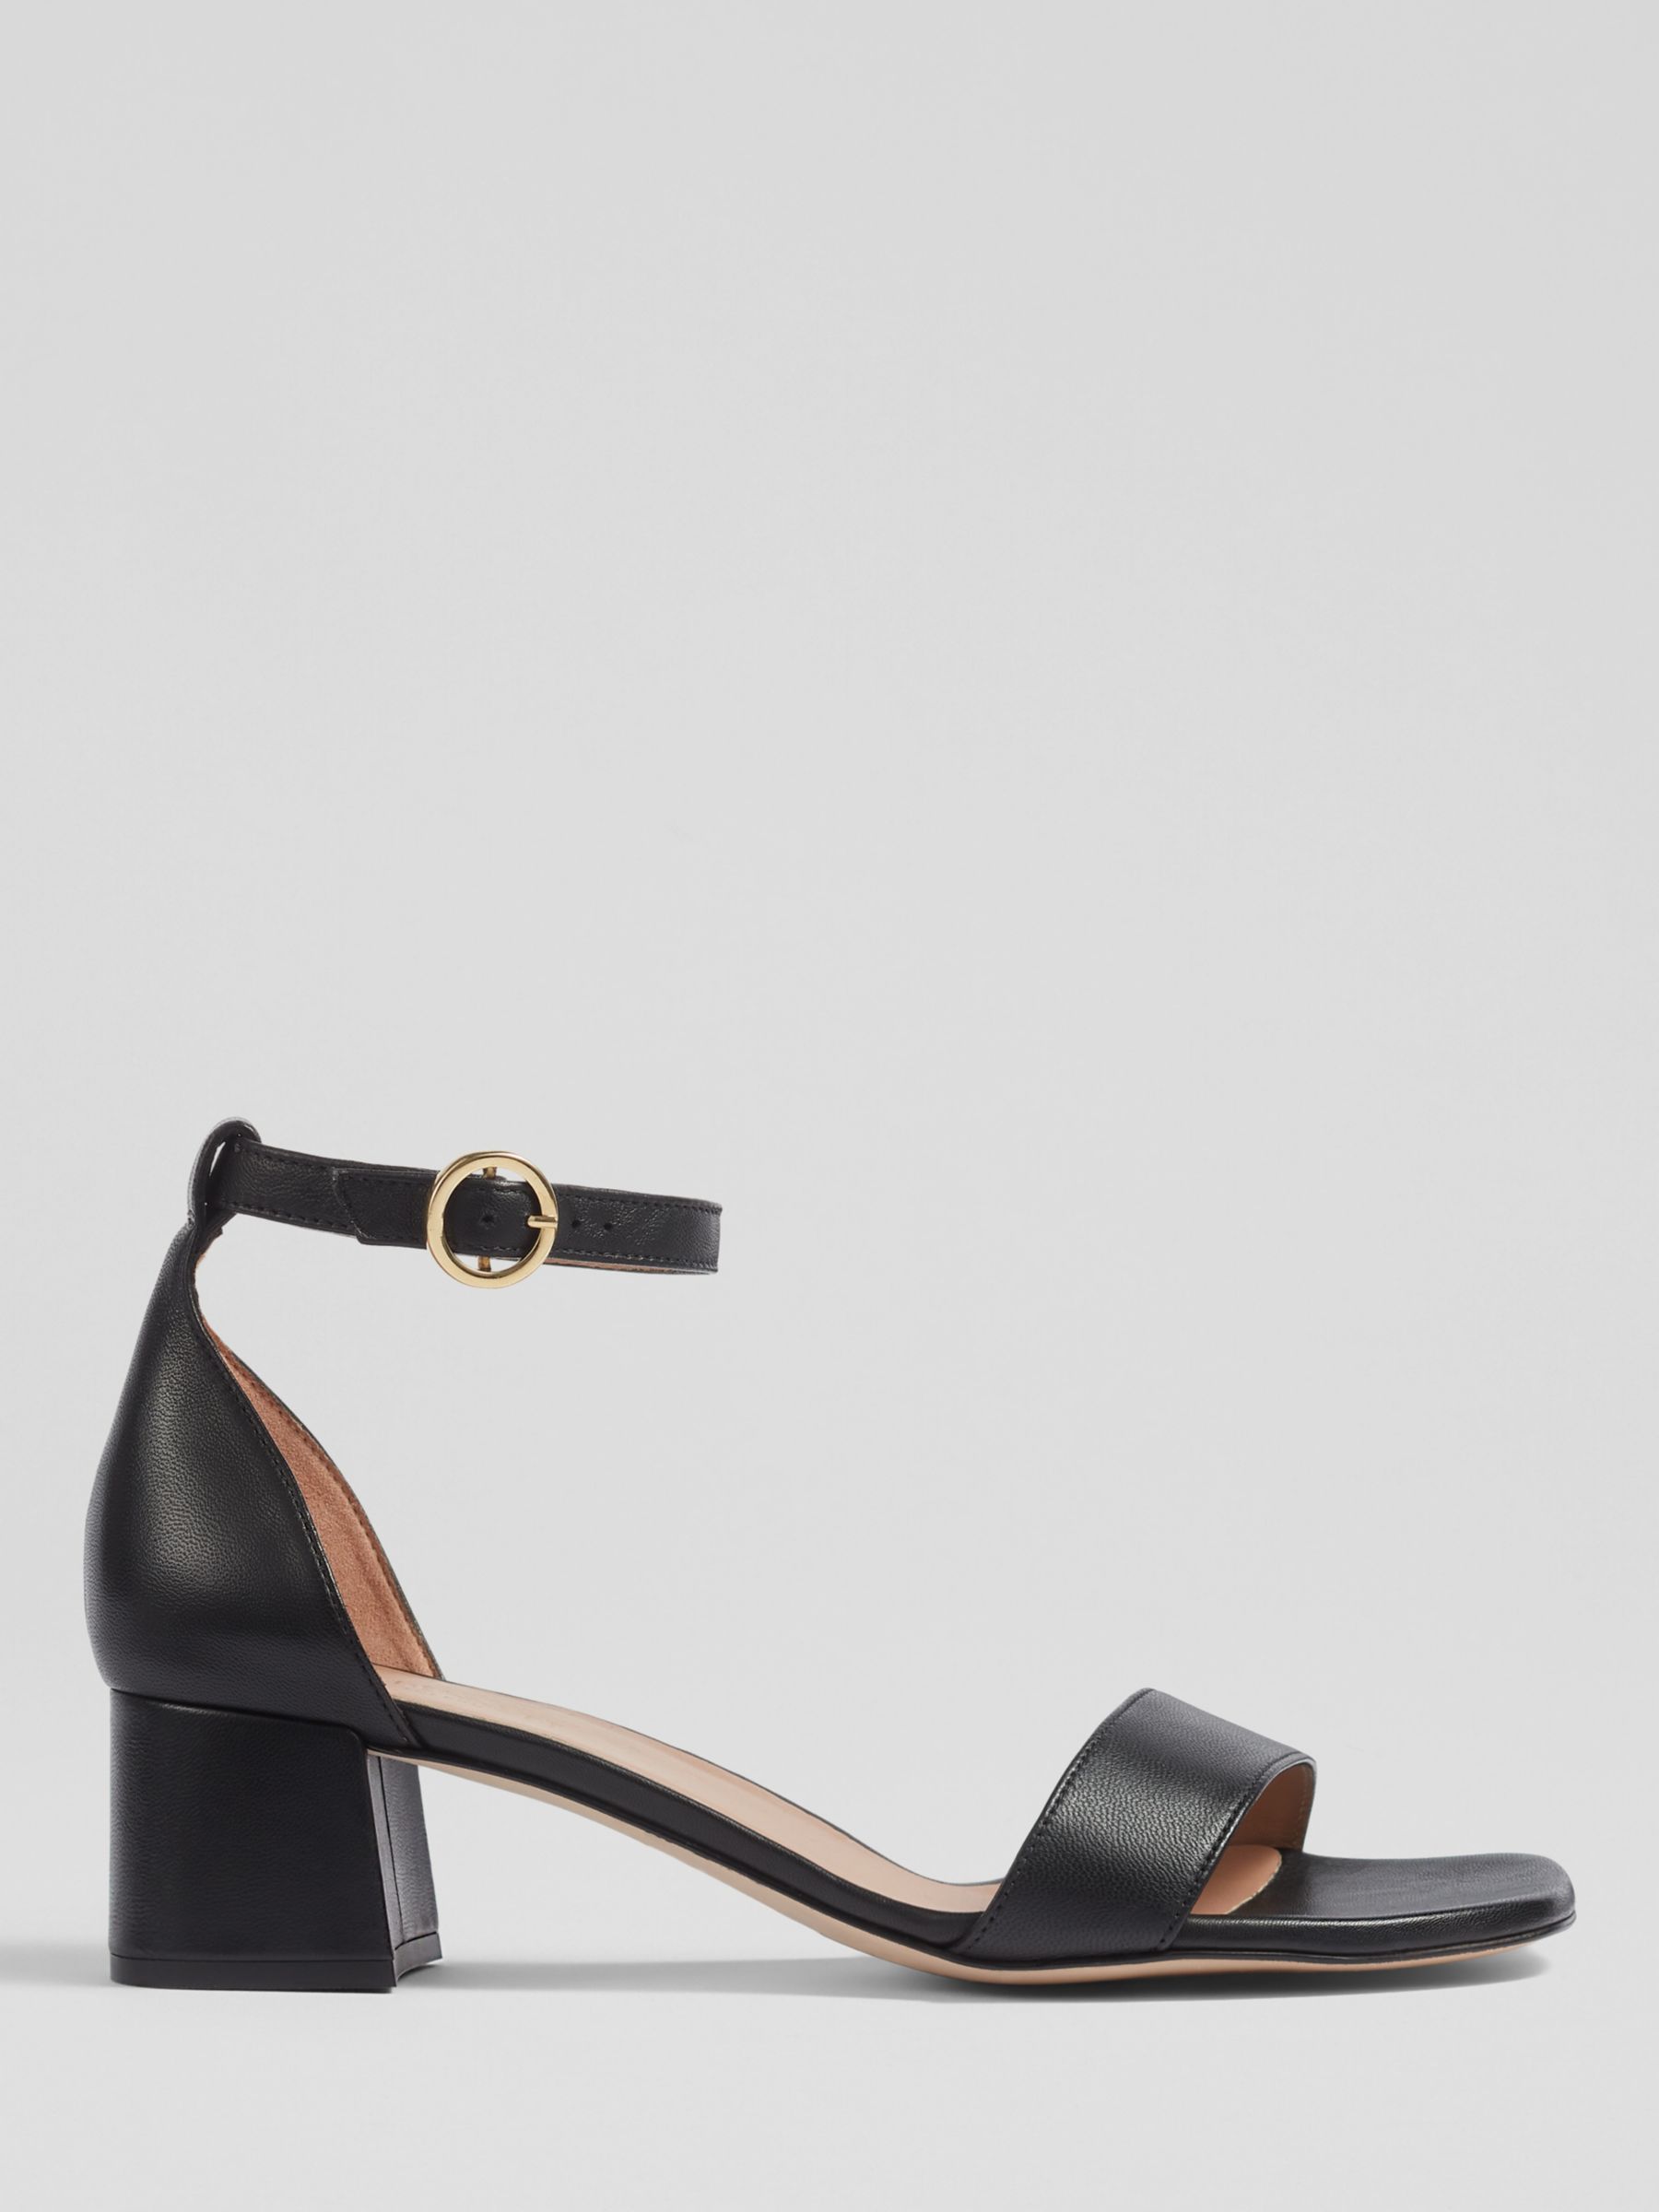 L.K.Bennett Nanette Nappa Leather Block Heel Sandals, Black, 2